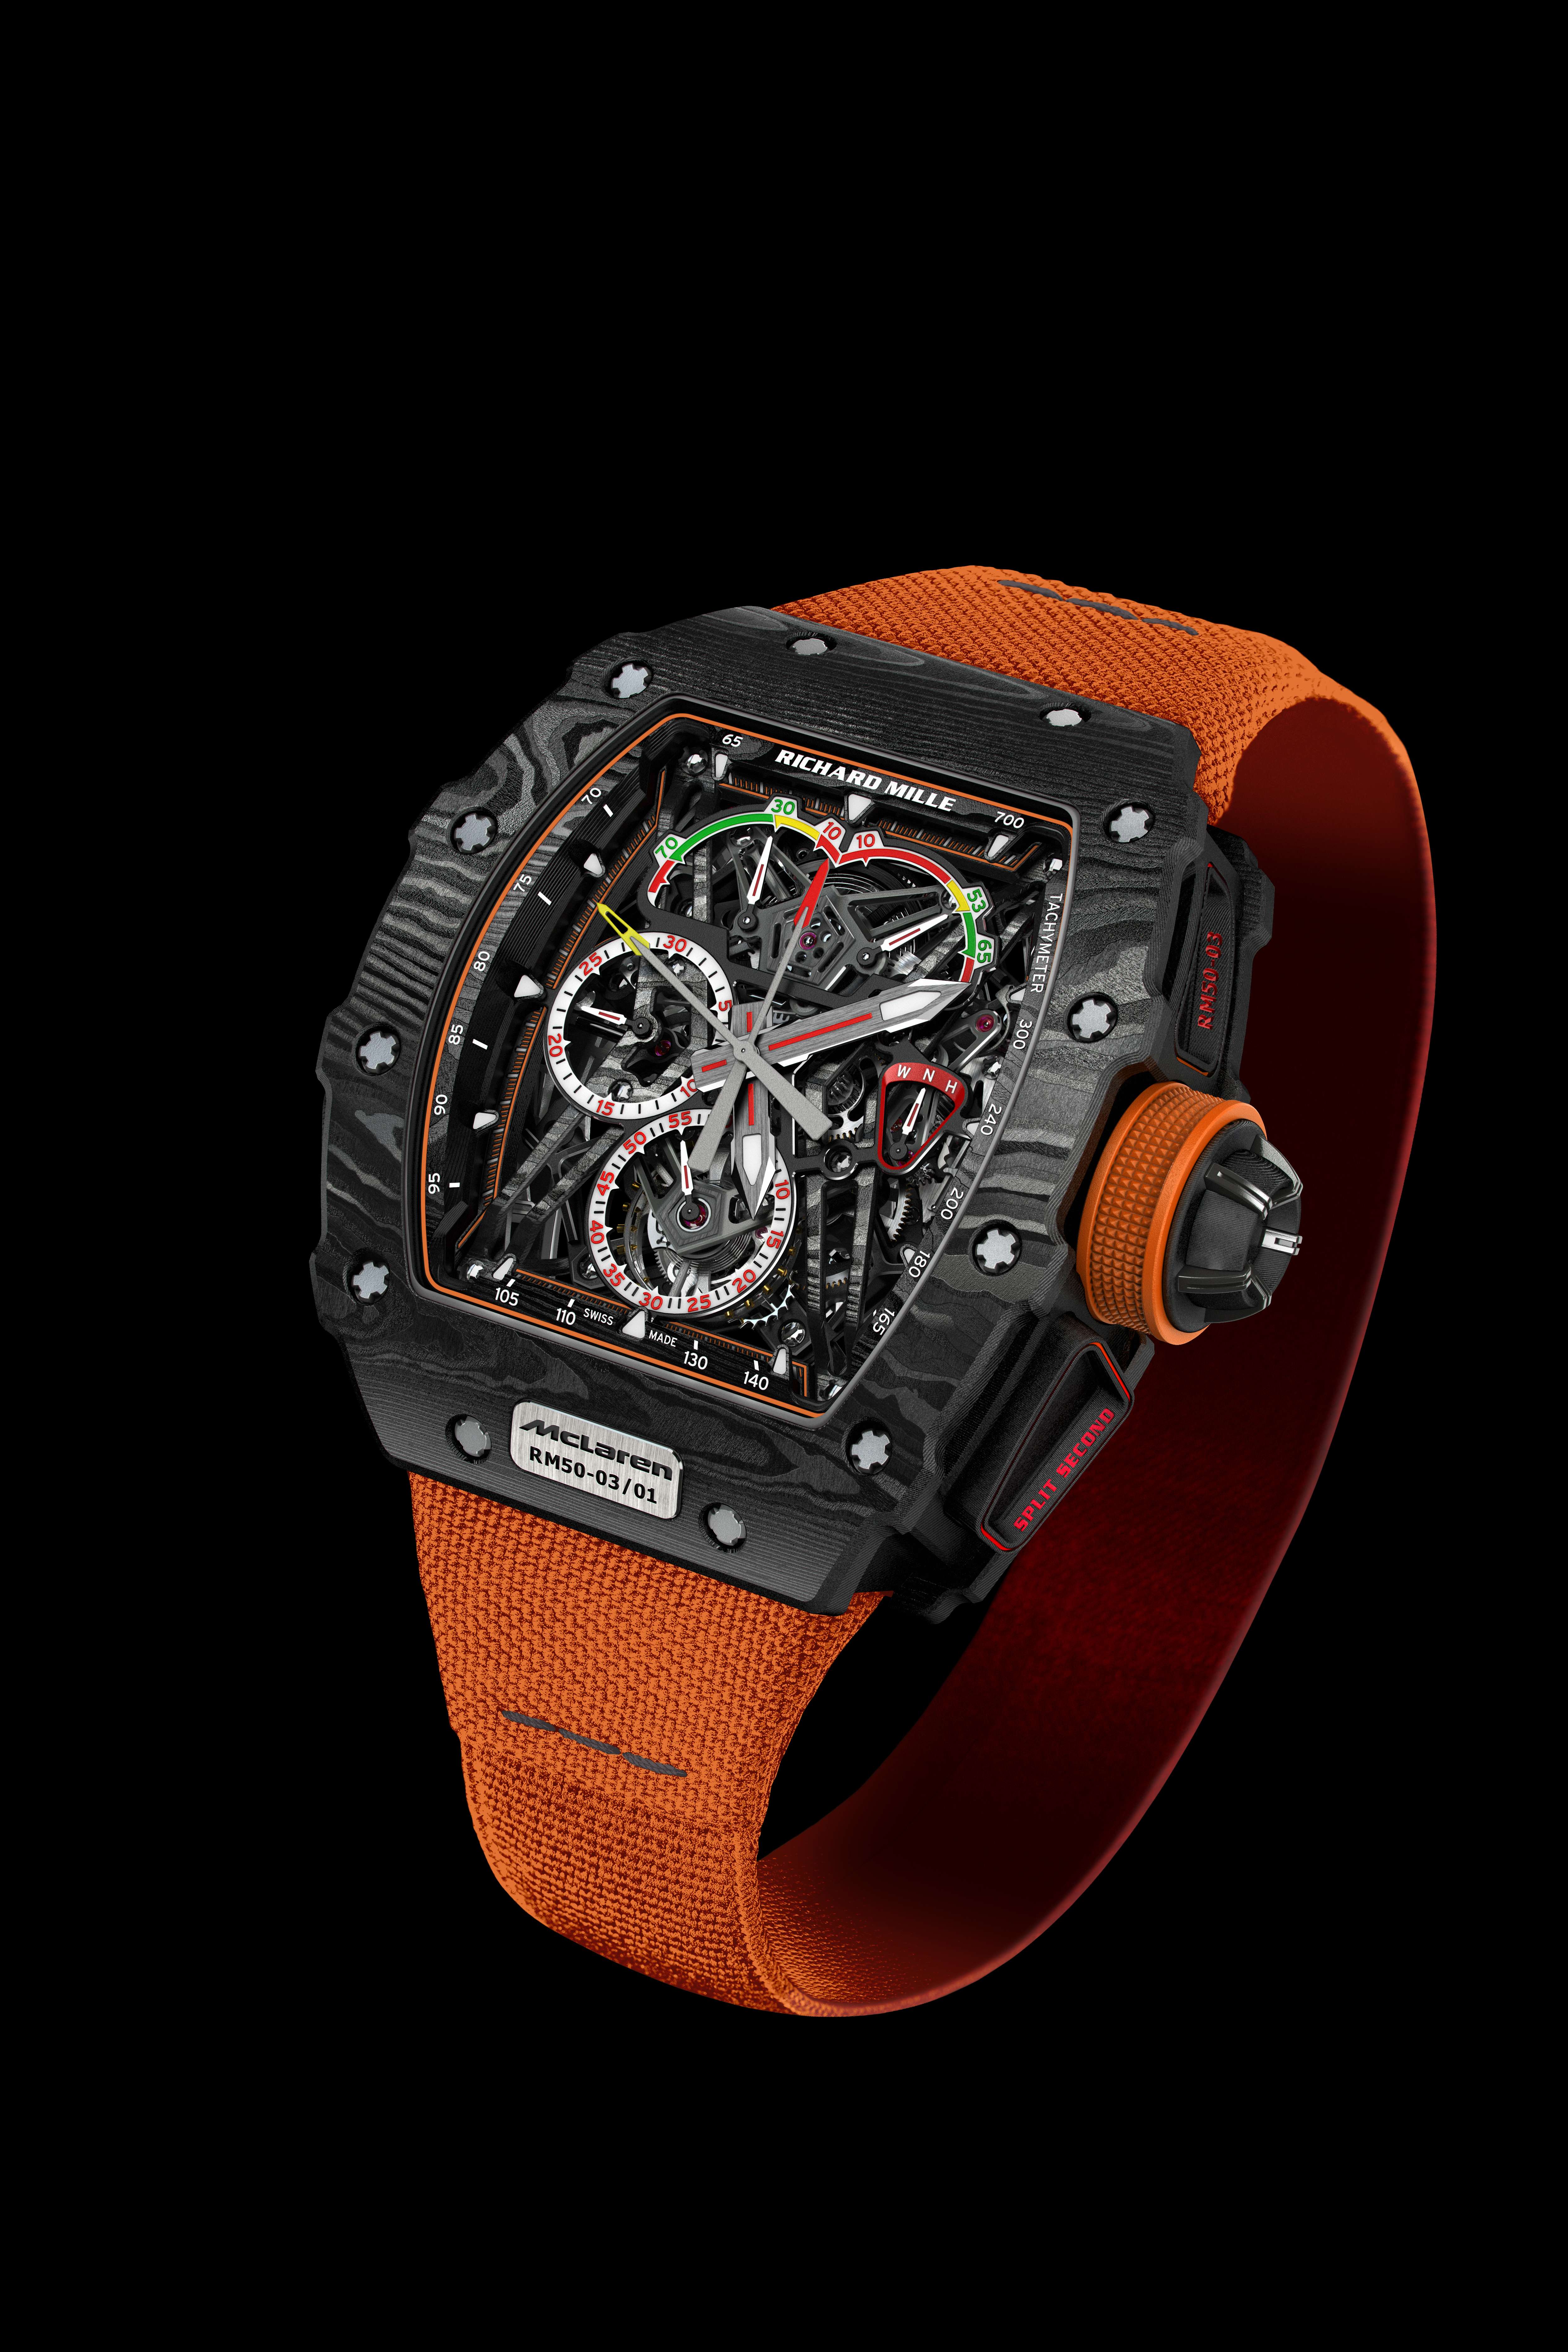 RM 50-03 McLaren F1 timepiece